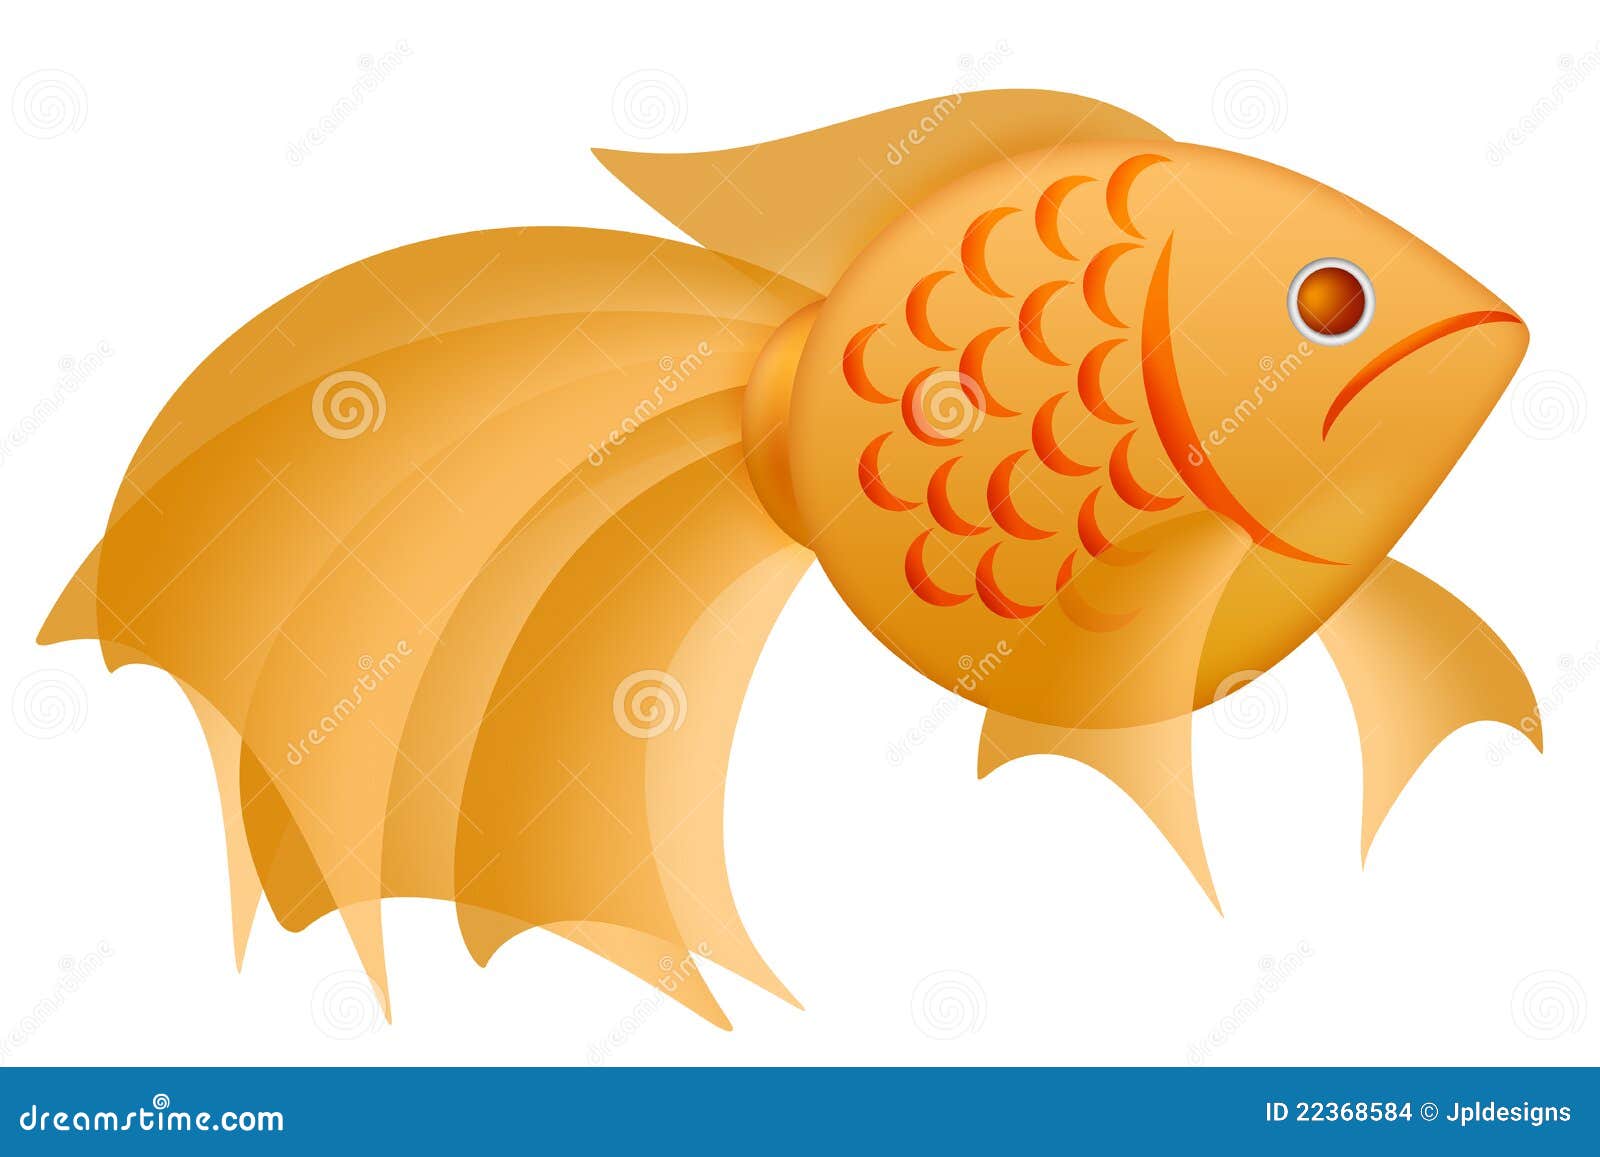 clipart pictures fantail goldfish - photo #46